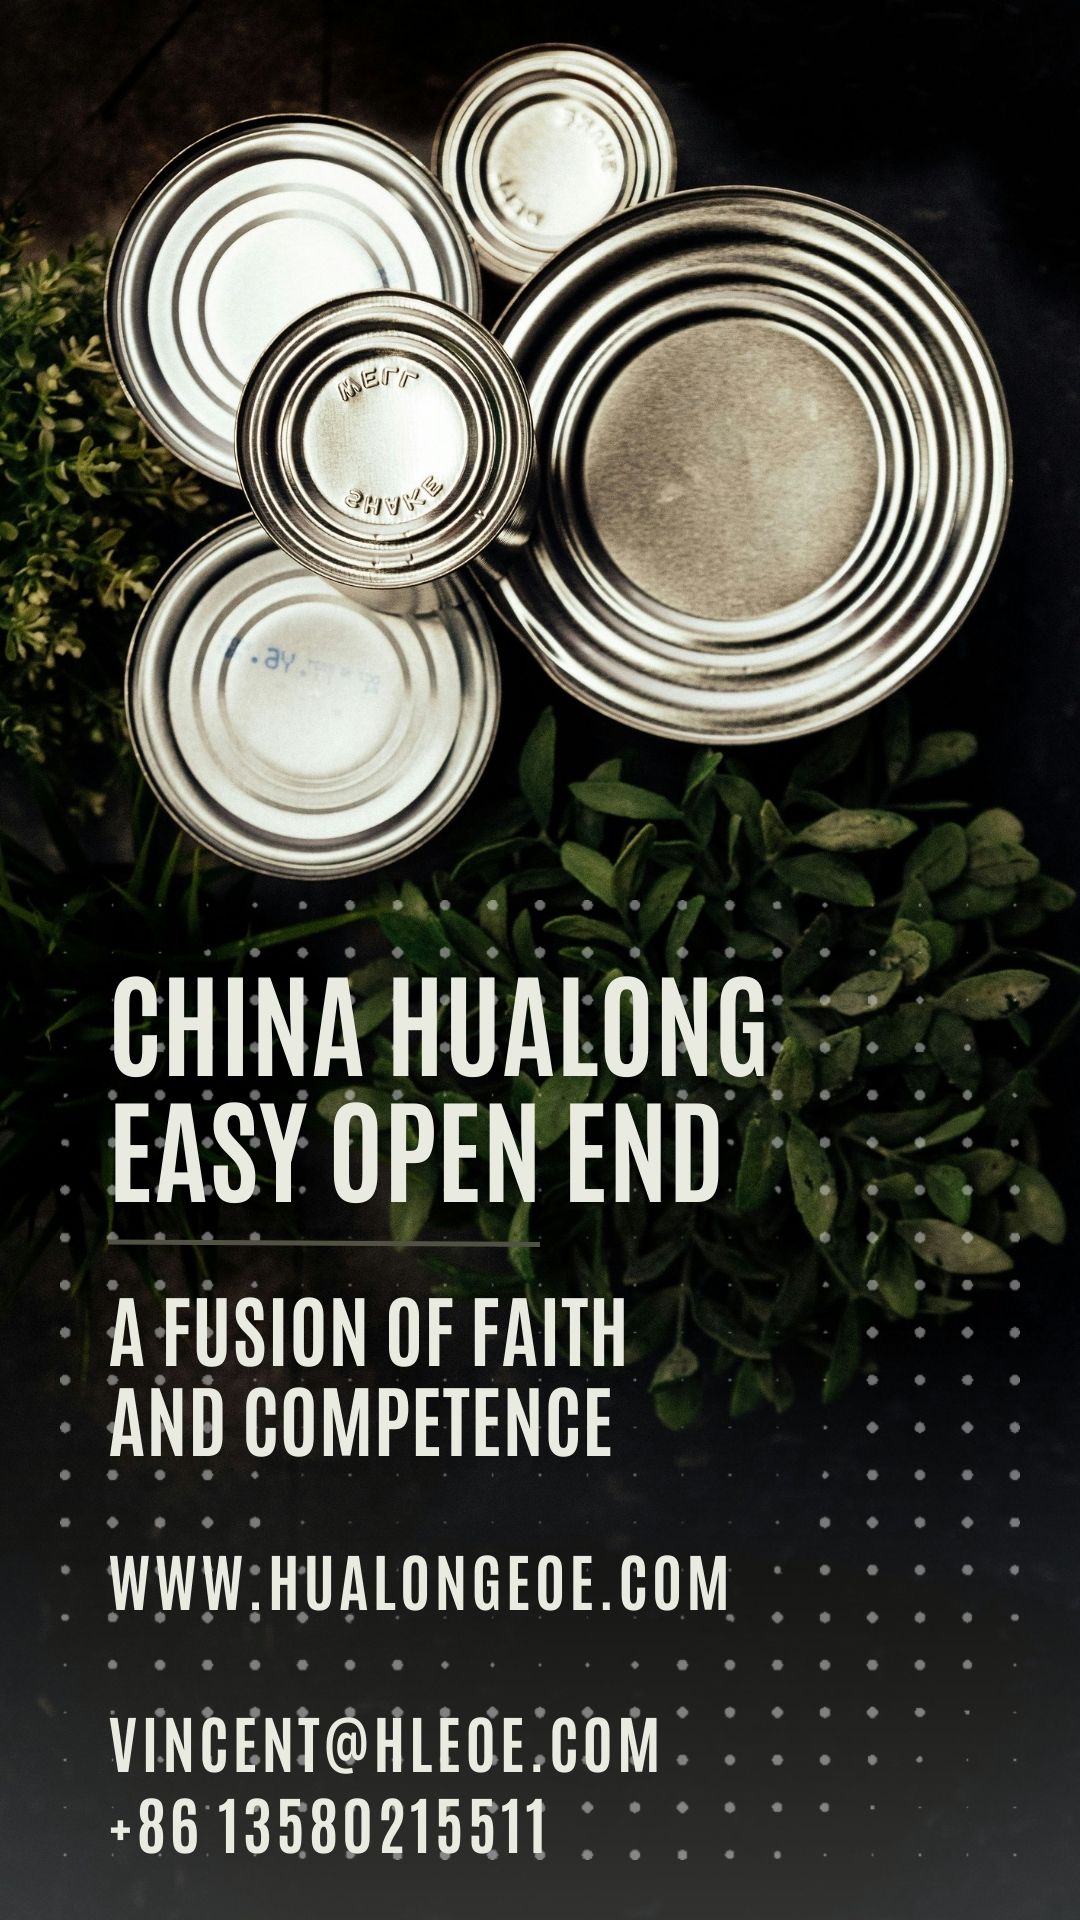 China Hualong EOE: מיזוג של אמונה וכשירות